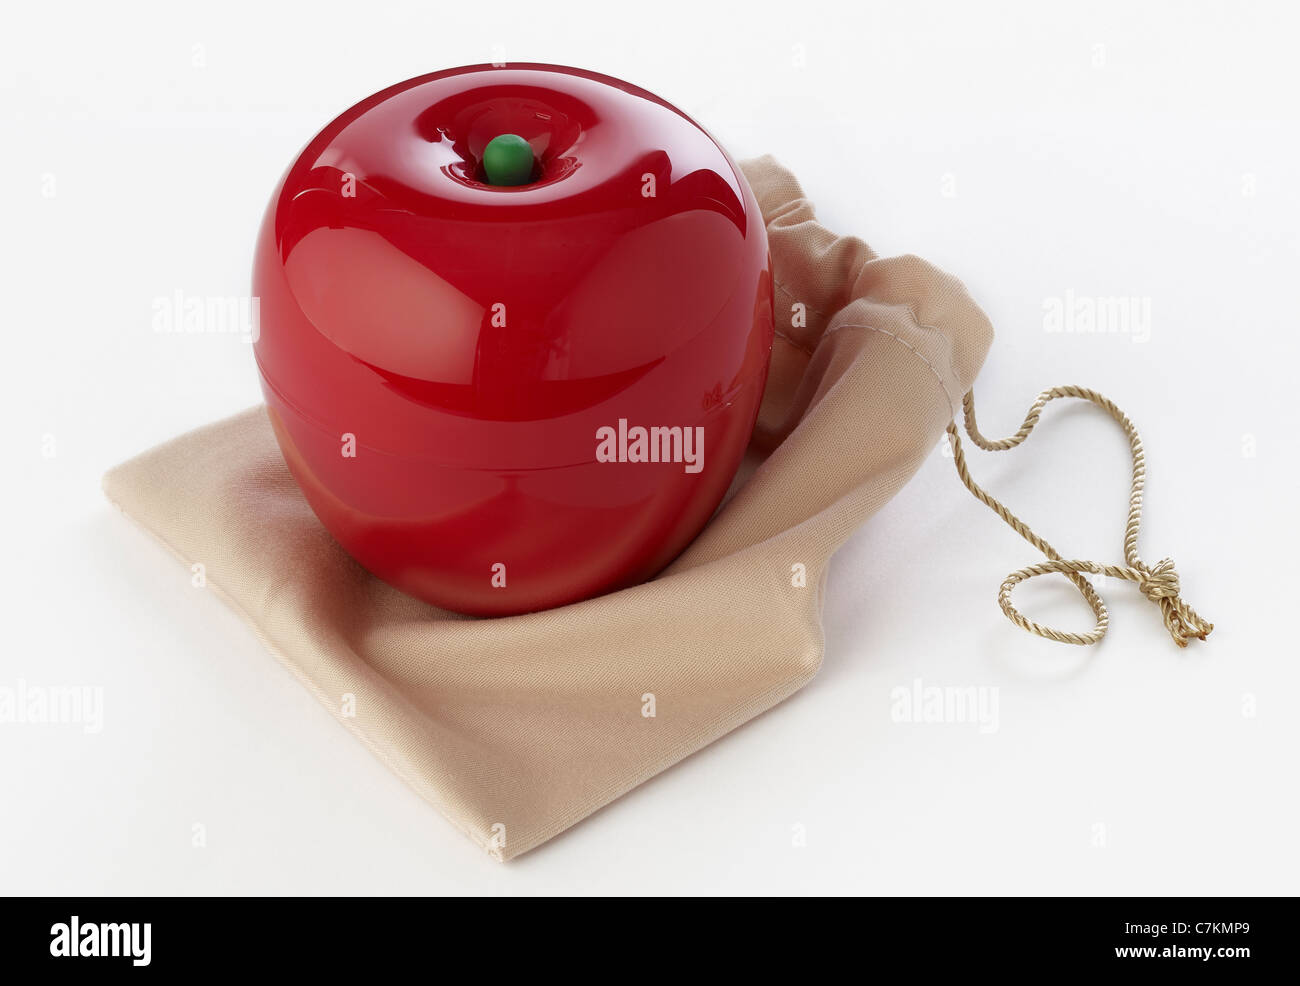 discrete apple shaped vibrator Stock Photo - Alamy